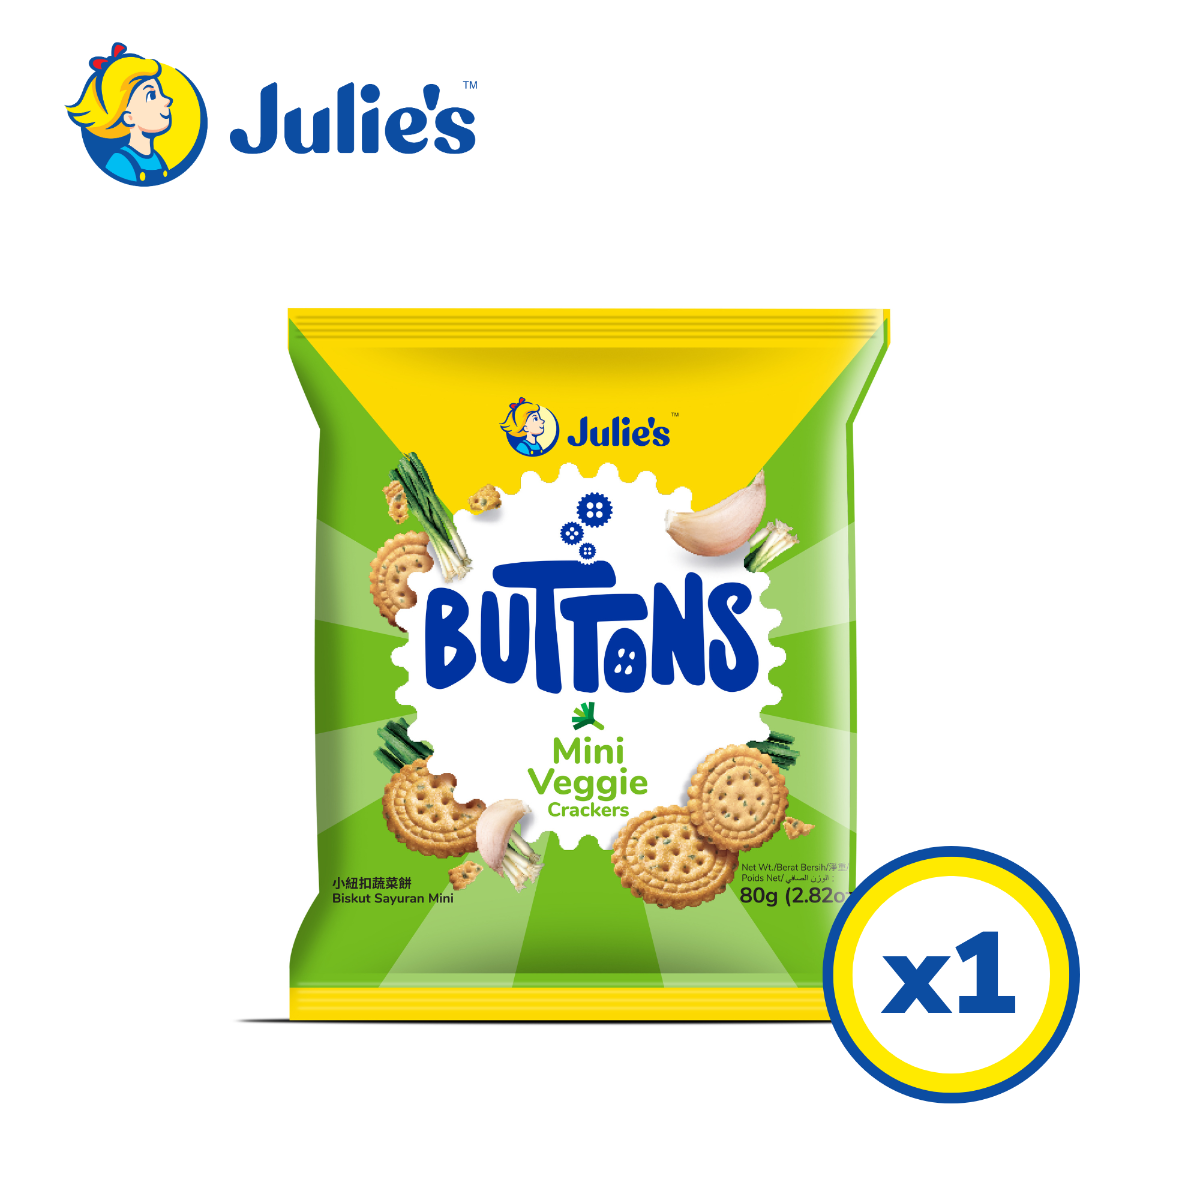 julie_s_buttons_mini_veggie_crackers_80g_v1